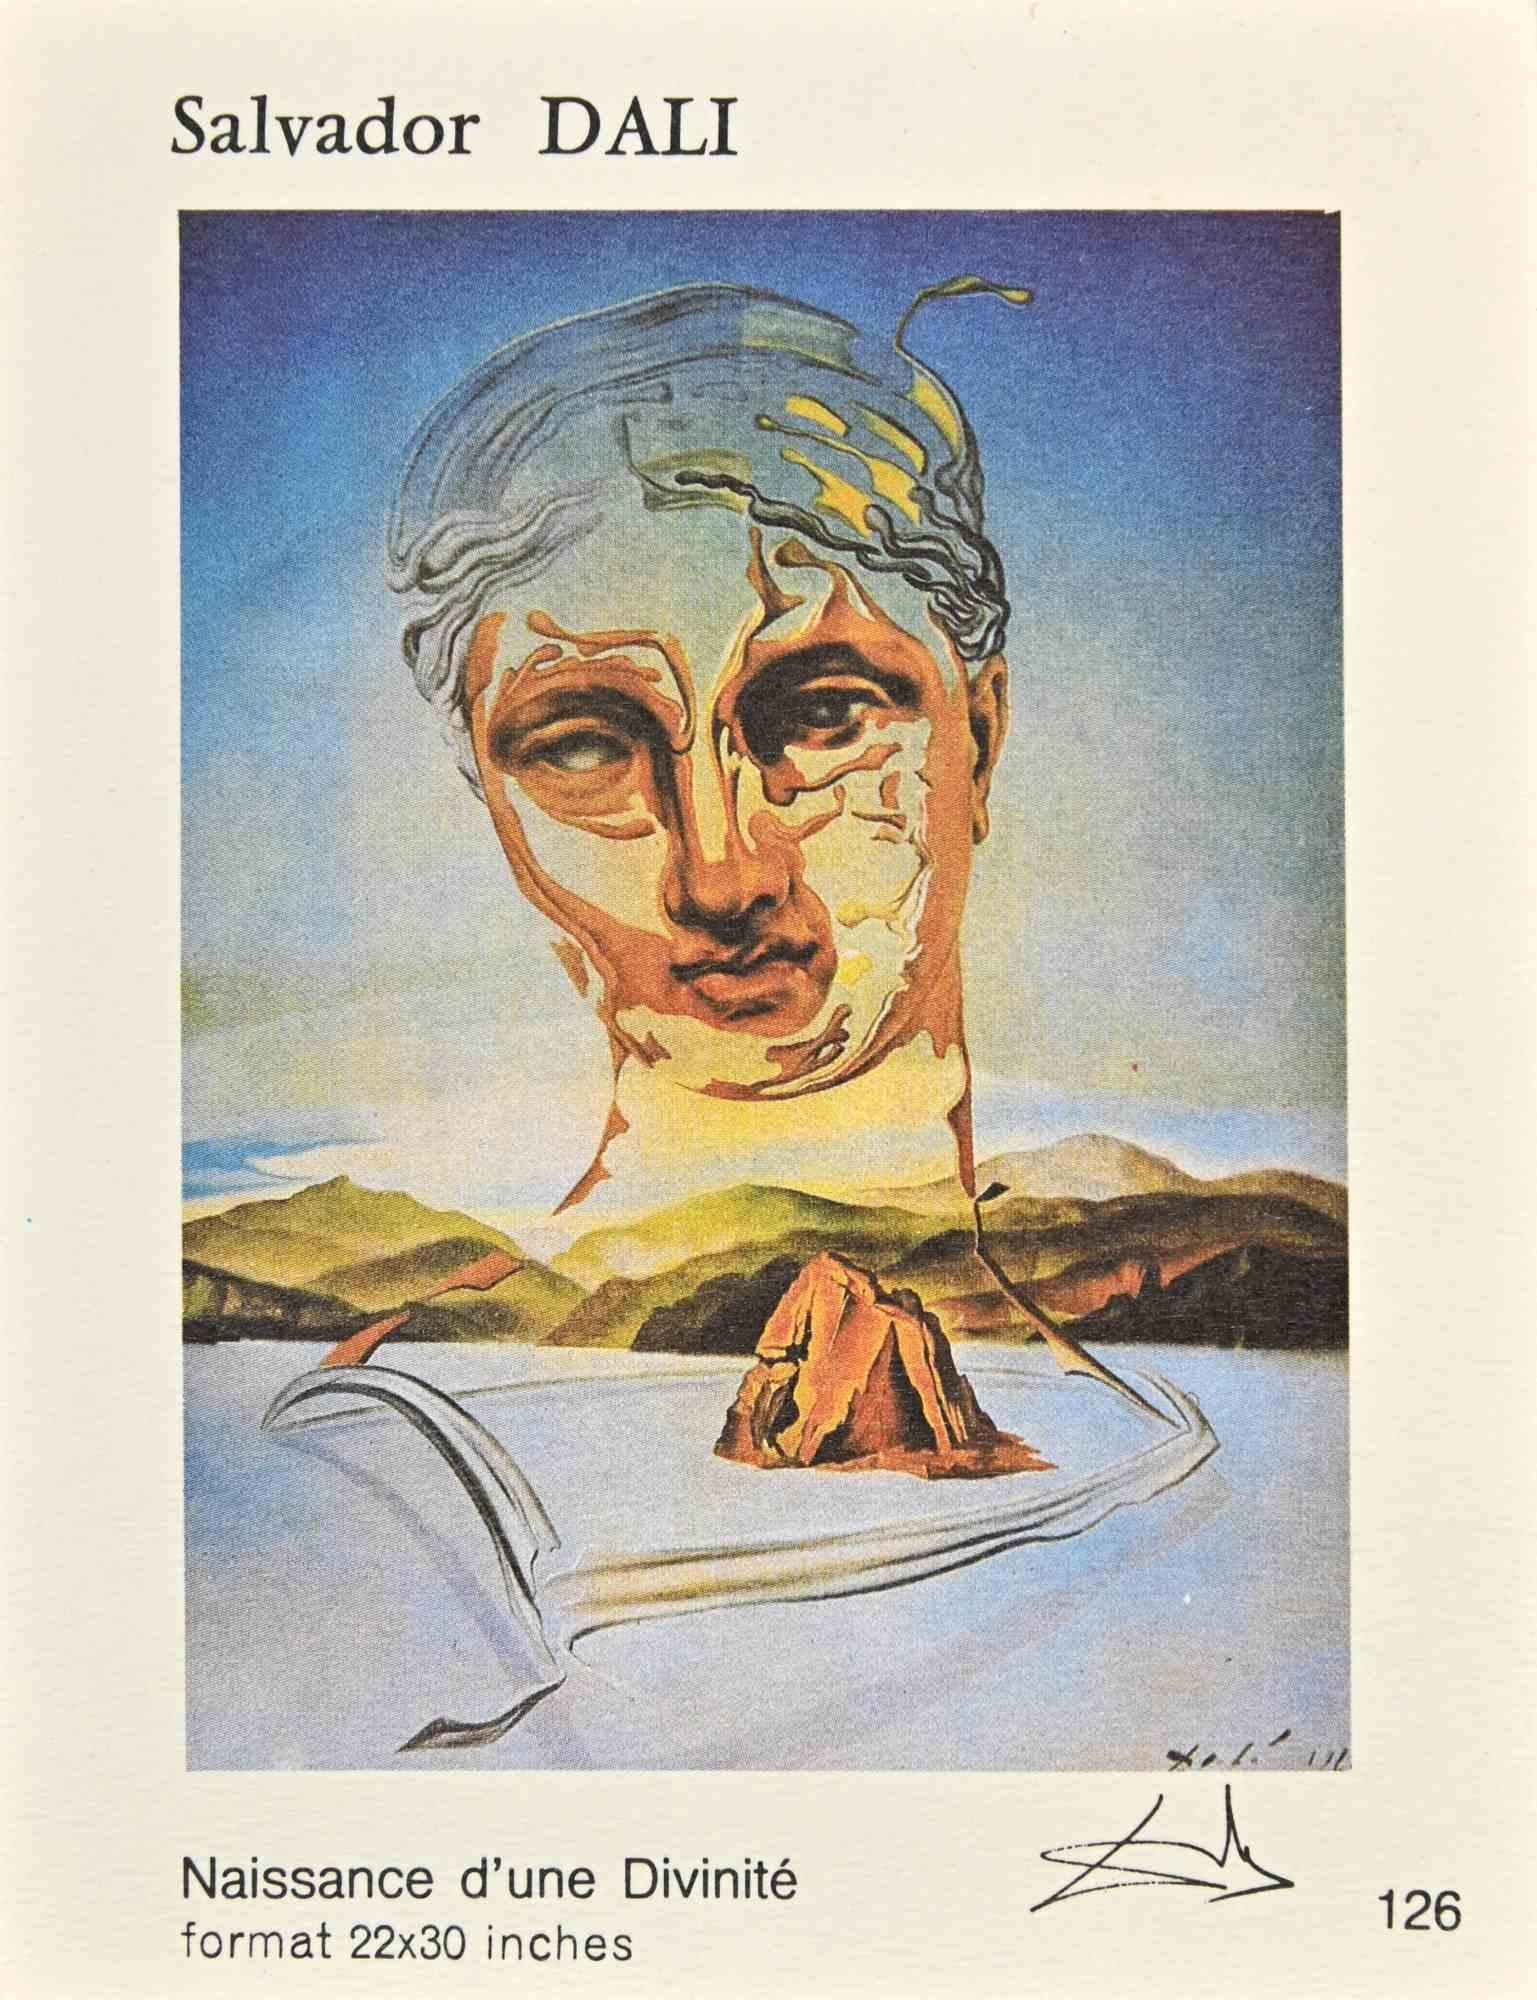 Collection of Vintage Cards After Salvador Dalì - 1980s - Surrealist Print by Salvador Dalí